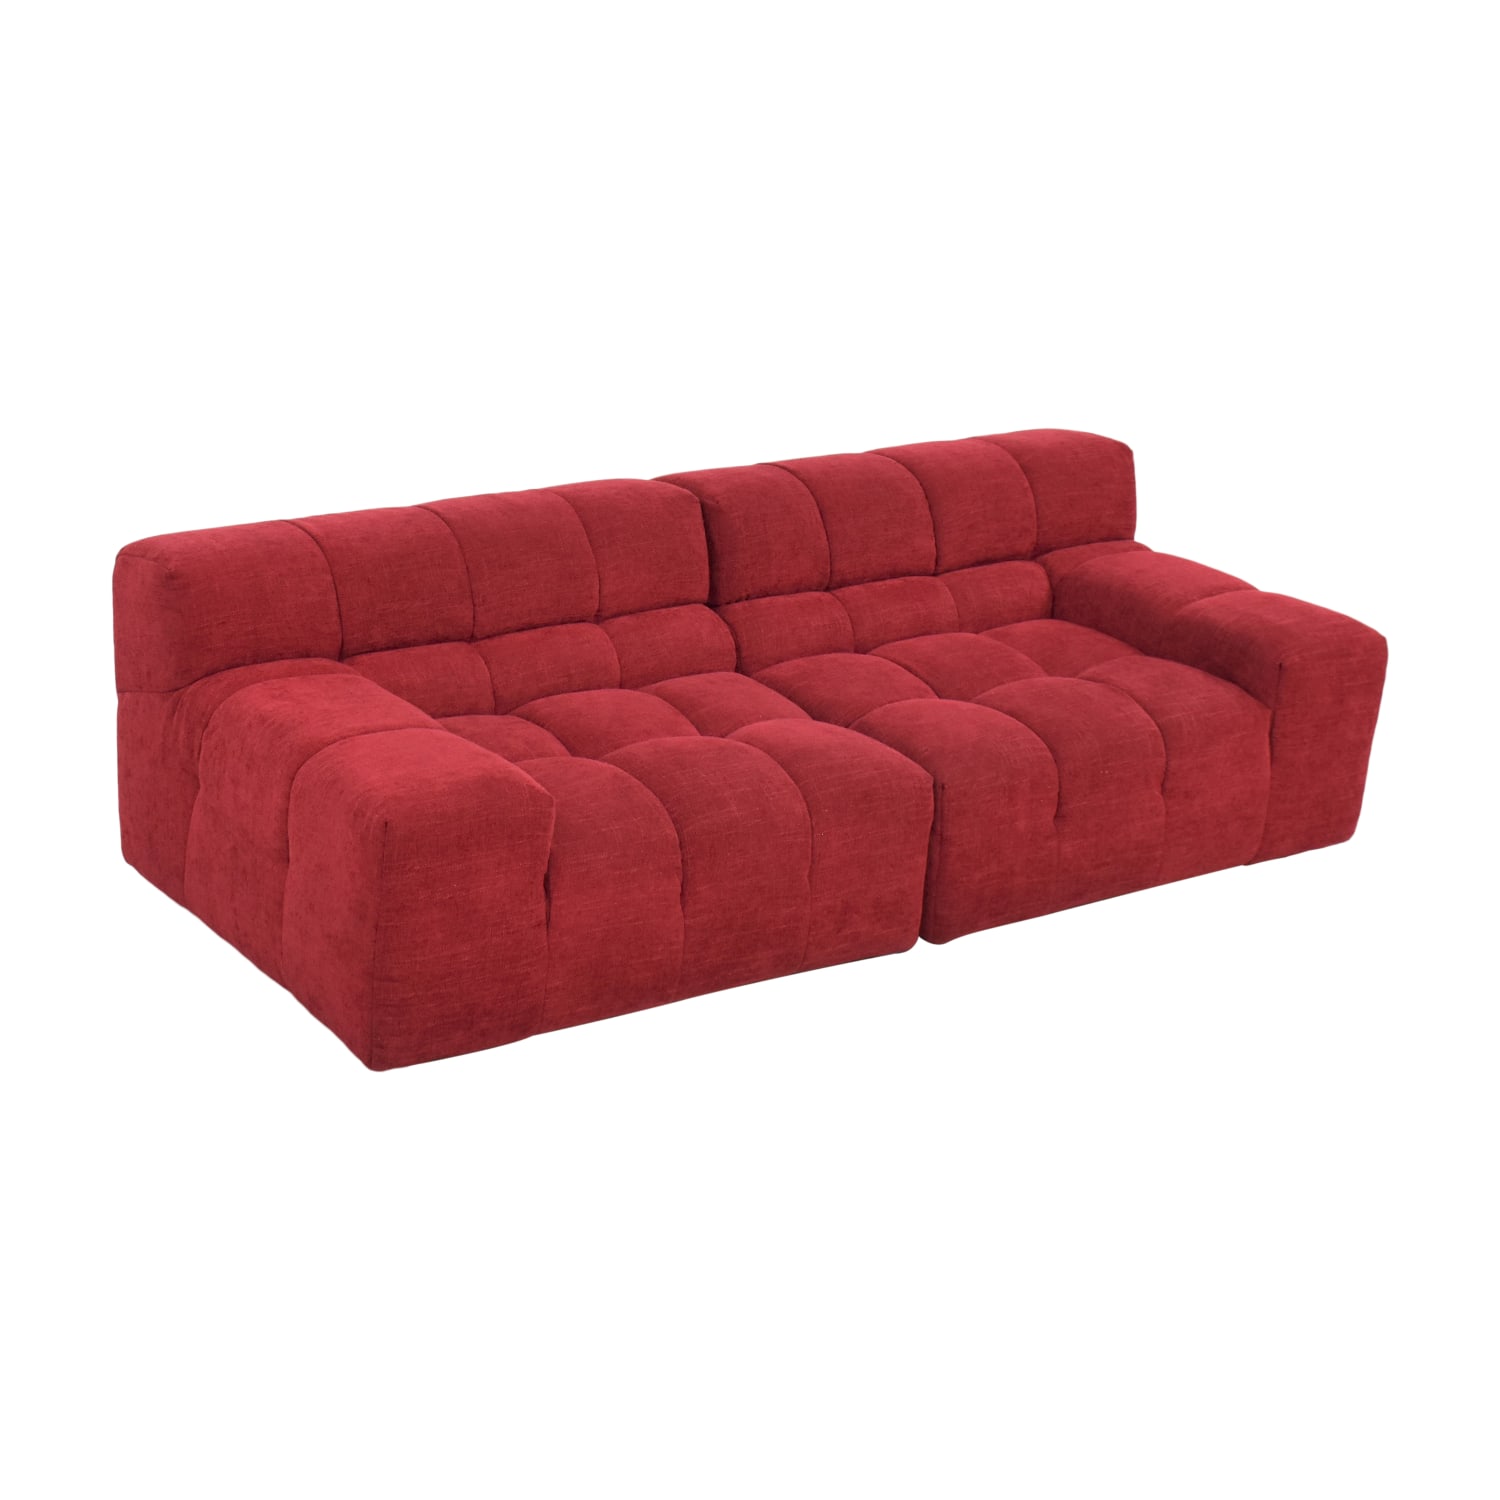  Modern Tufted 2-Piece Sectional Sofa  nj